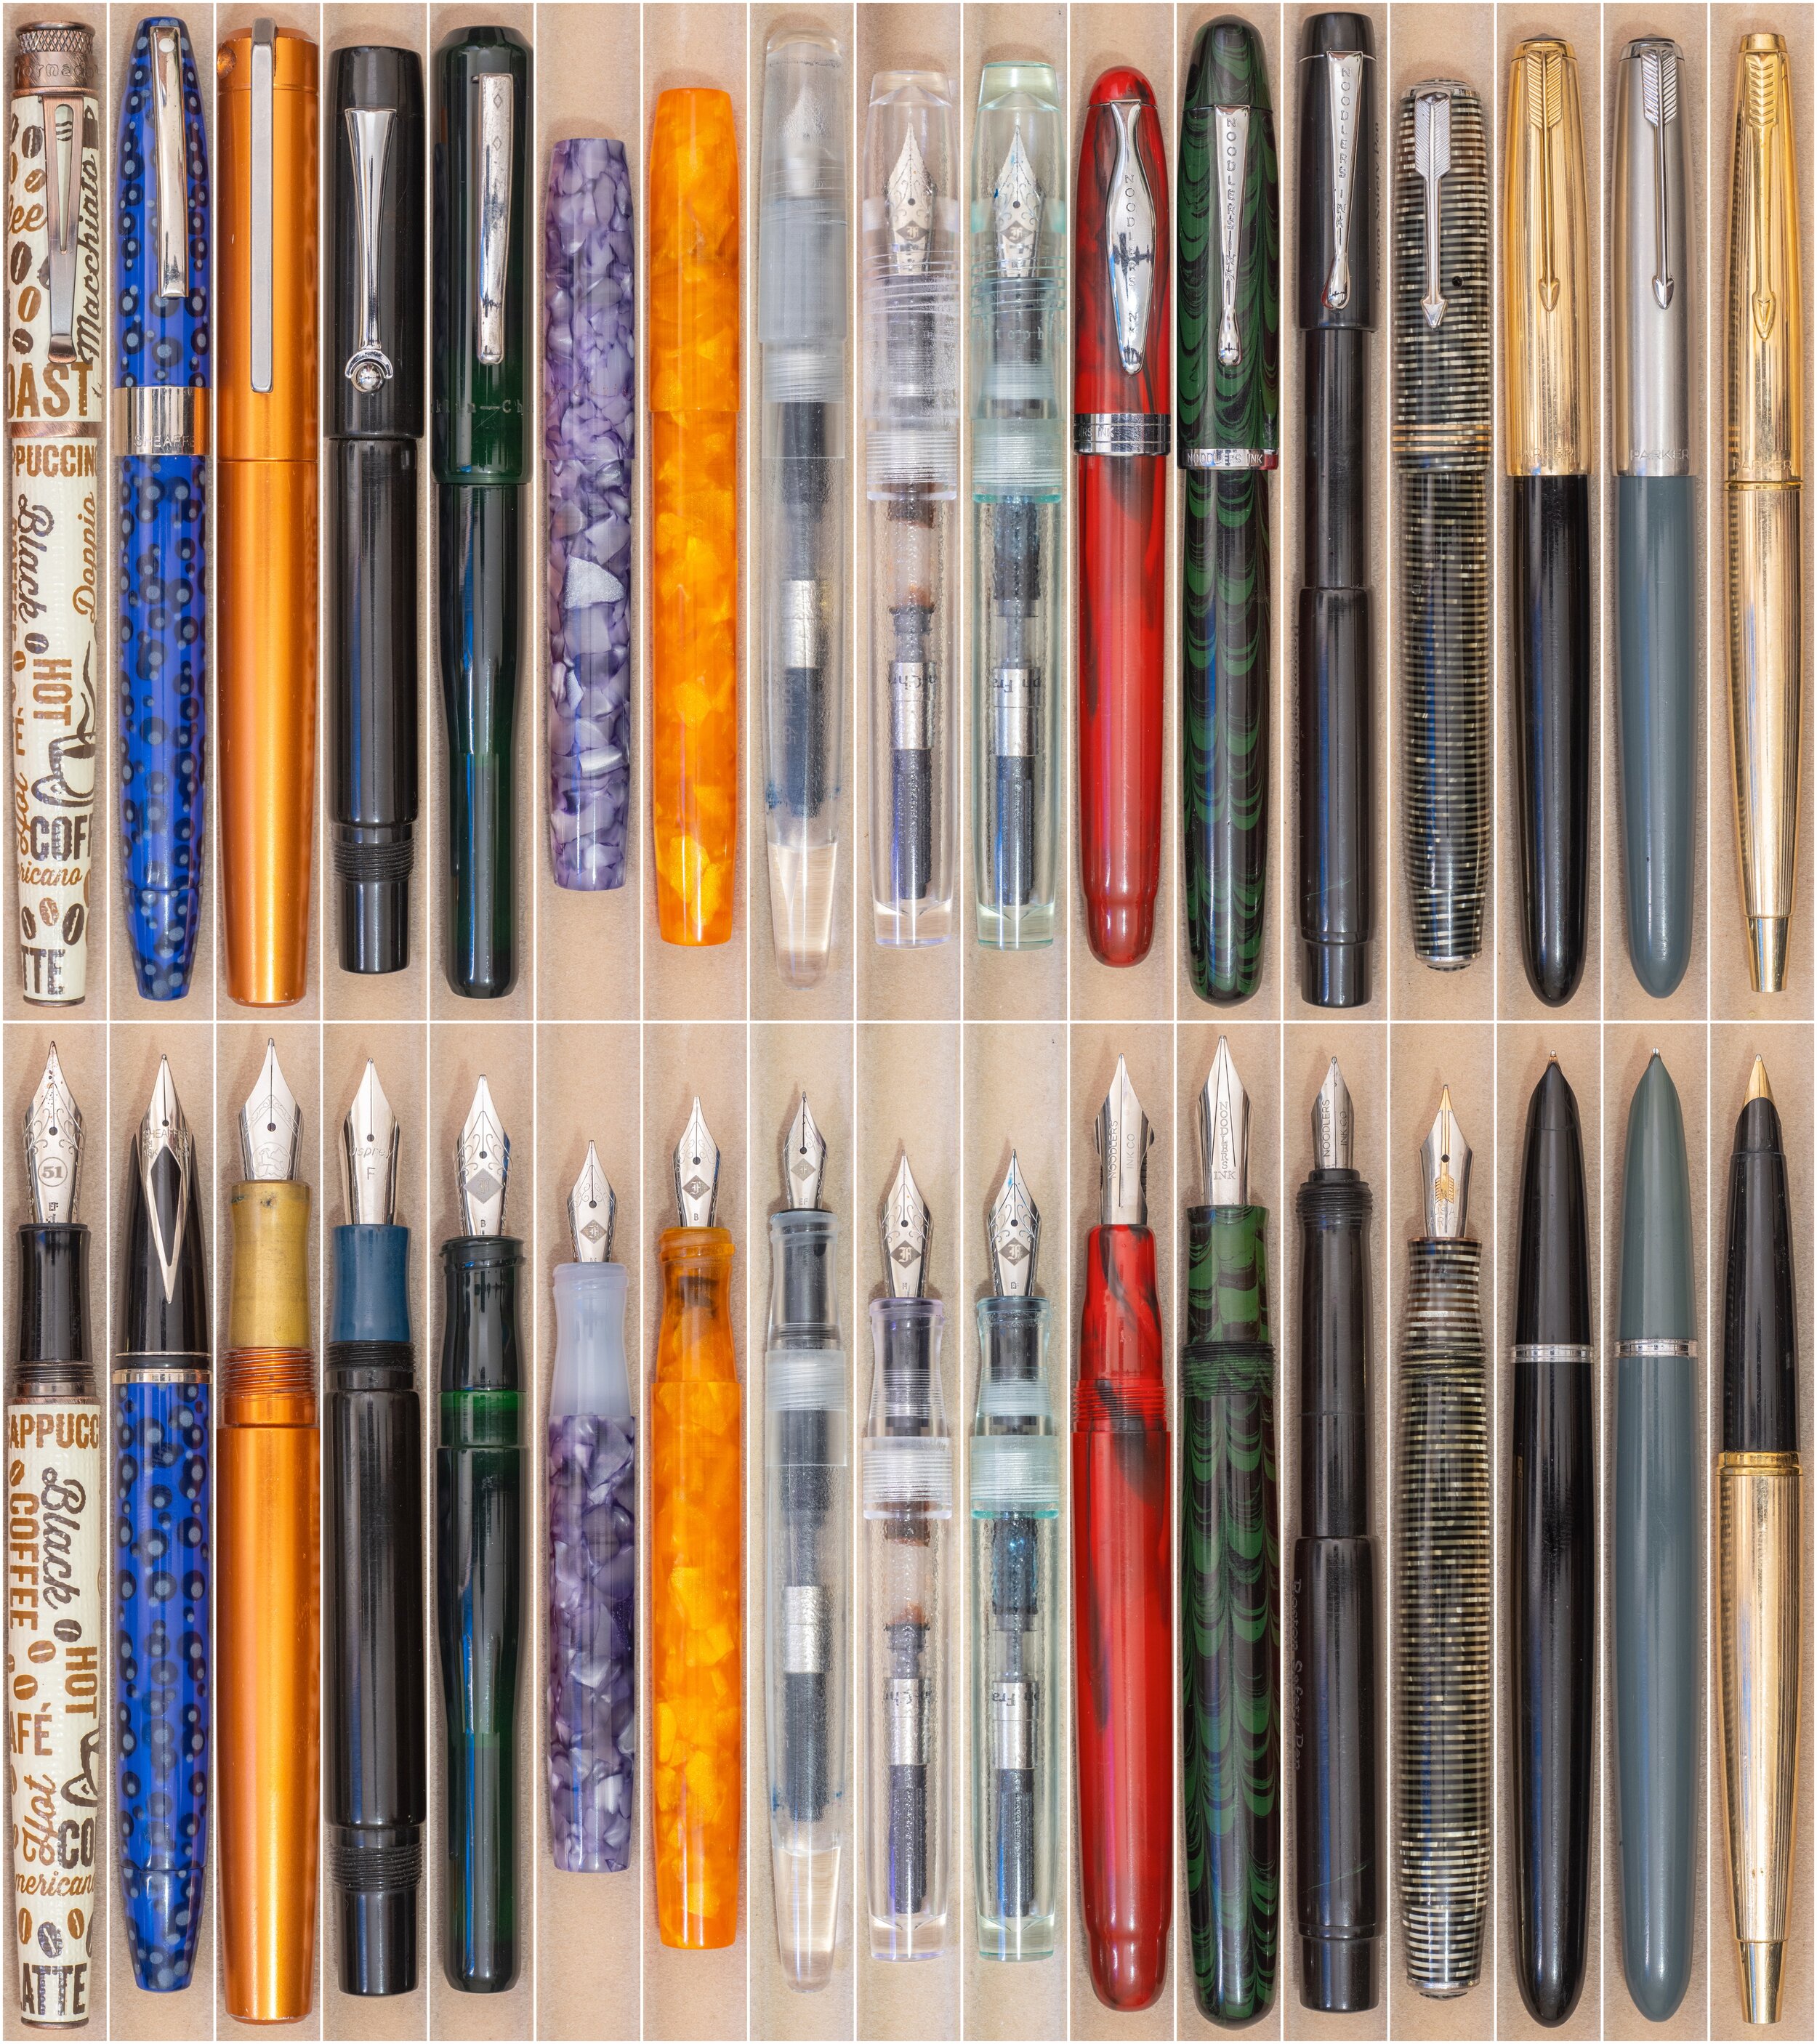 Faber-Castell Broadpen 1554 Pen Review - My Pen Needs InkMy Pen